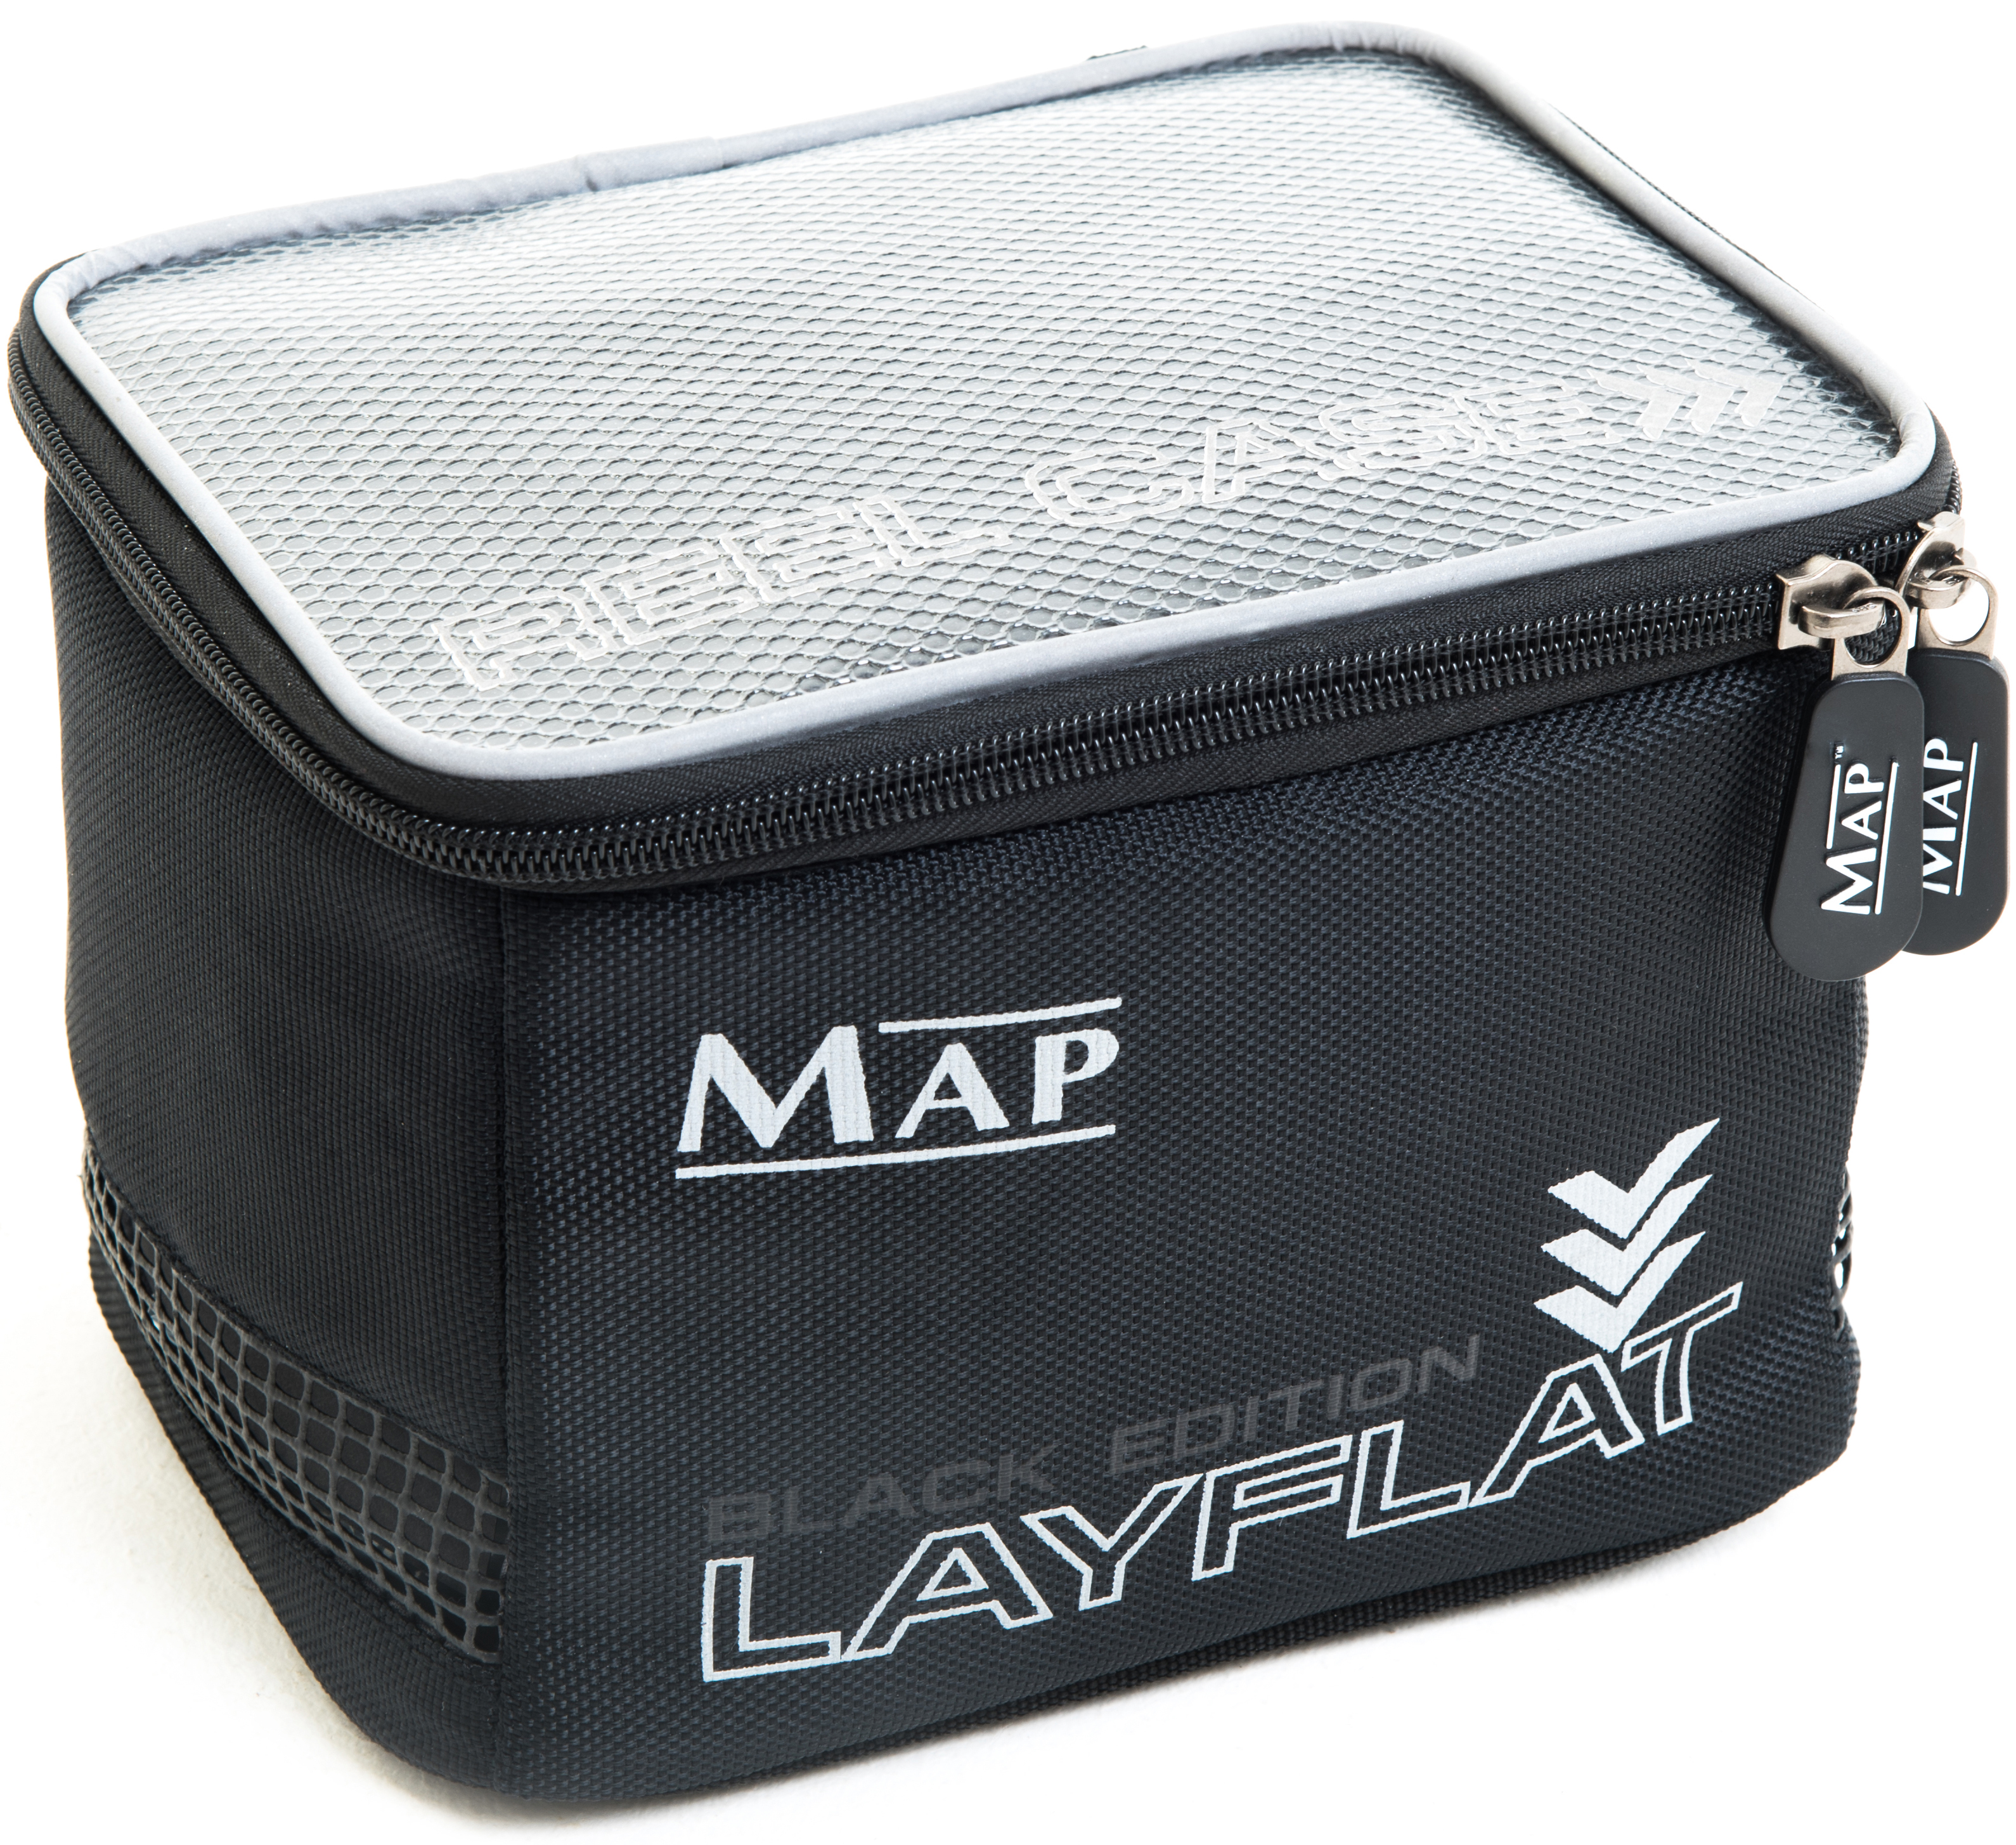 Тубус для катушек. Map сумка-чехол для катушек Parabolix Layflat Black Edition Reel Case. Чехол для катушек рыболовных Daiwa. Map Parabolix Layflat Black Edition Accessory Bag. Кейс для катушек Daiwa.